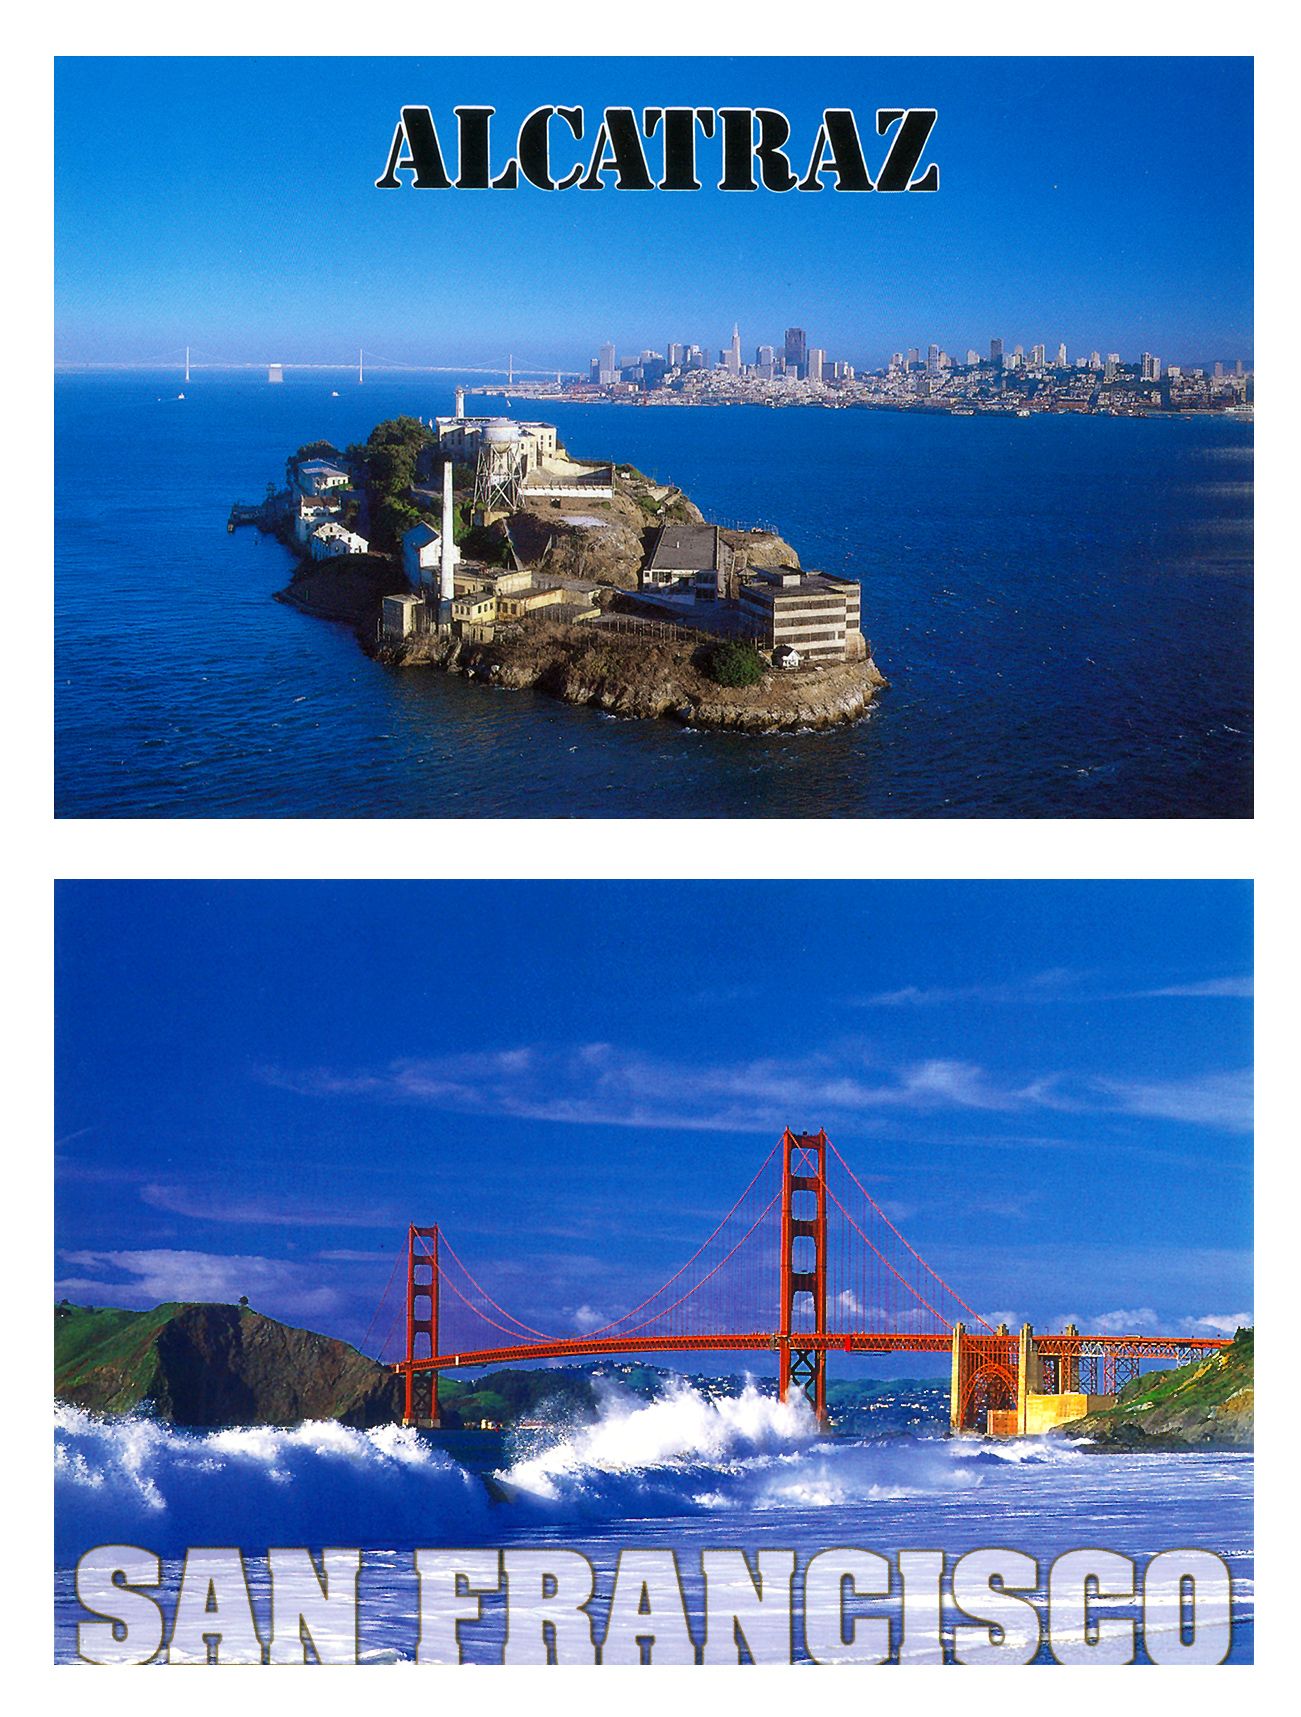 San Francisco Alcatraz Island California CA Postcard Details about   Wish You Were Here 